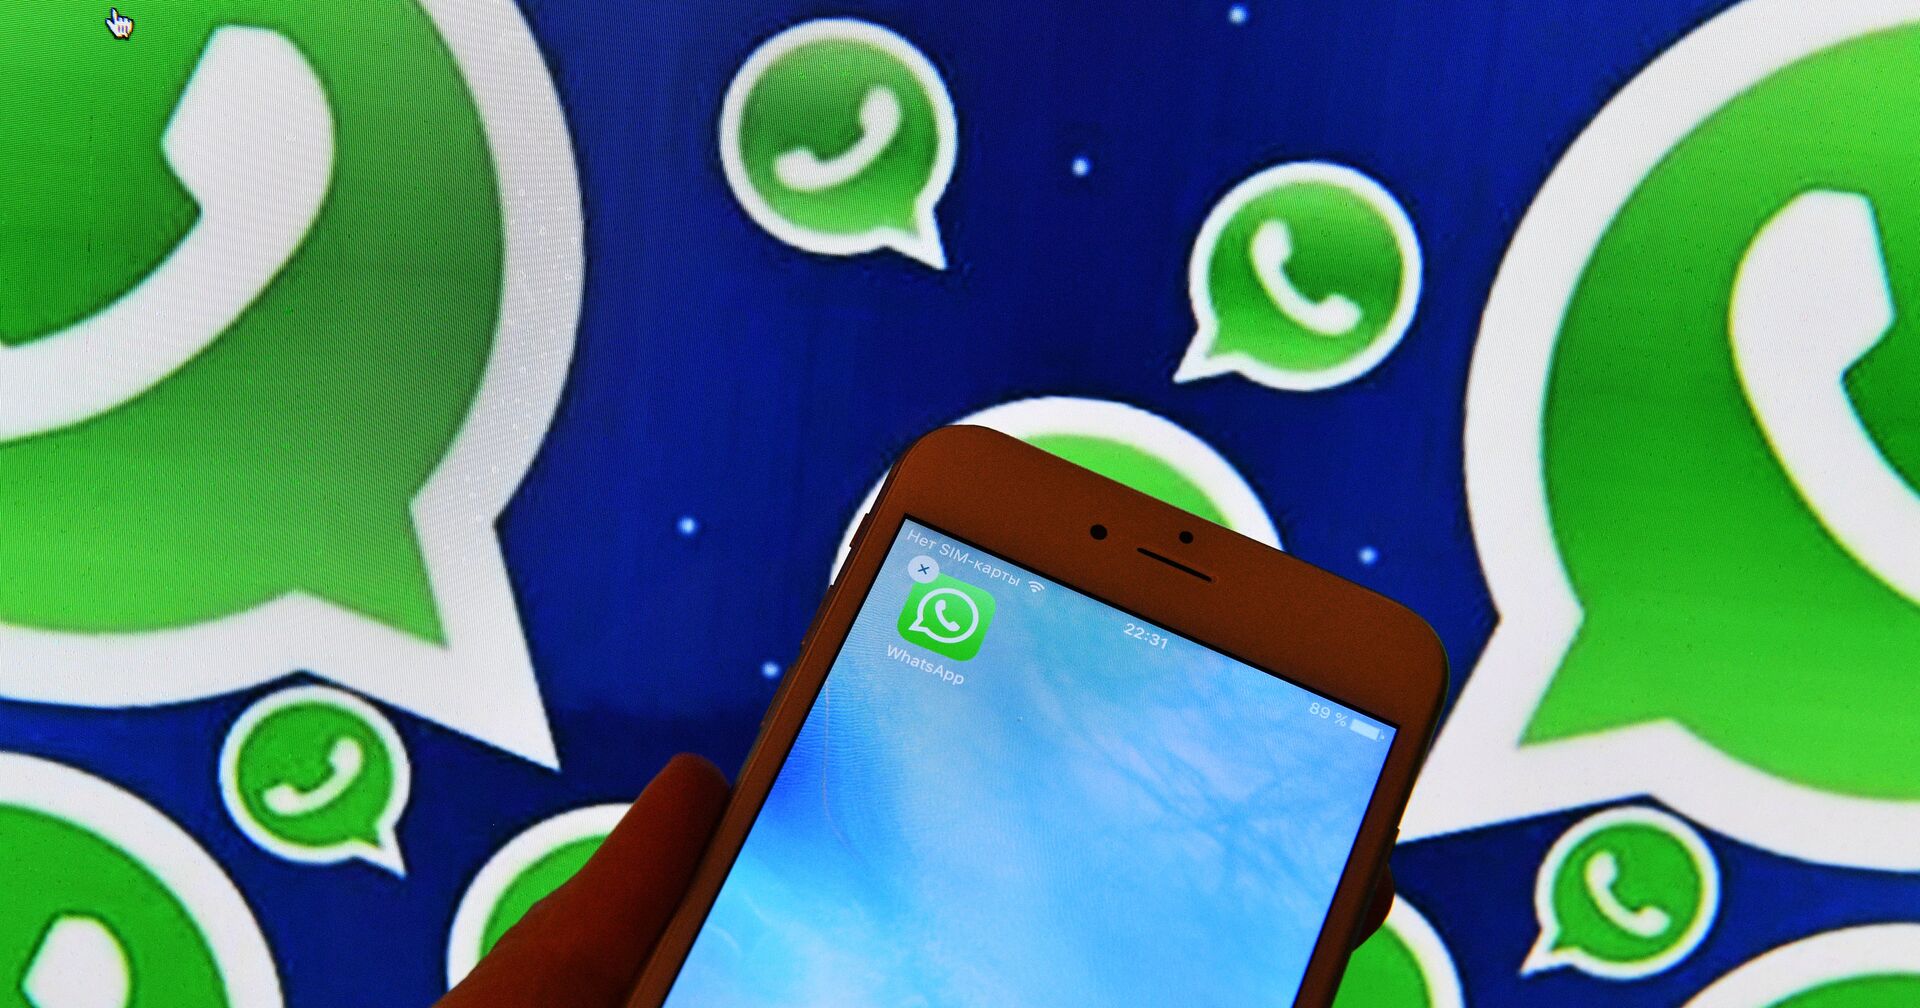 Иконка мессенджера WhatsApp на экране смартфона - ИноСМИ, 1920, 24.01.2021